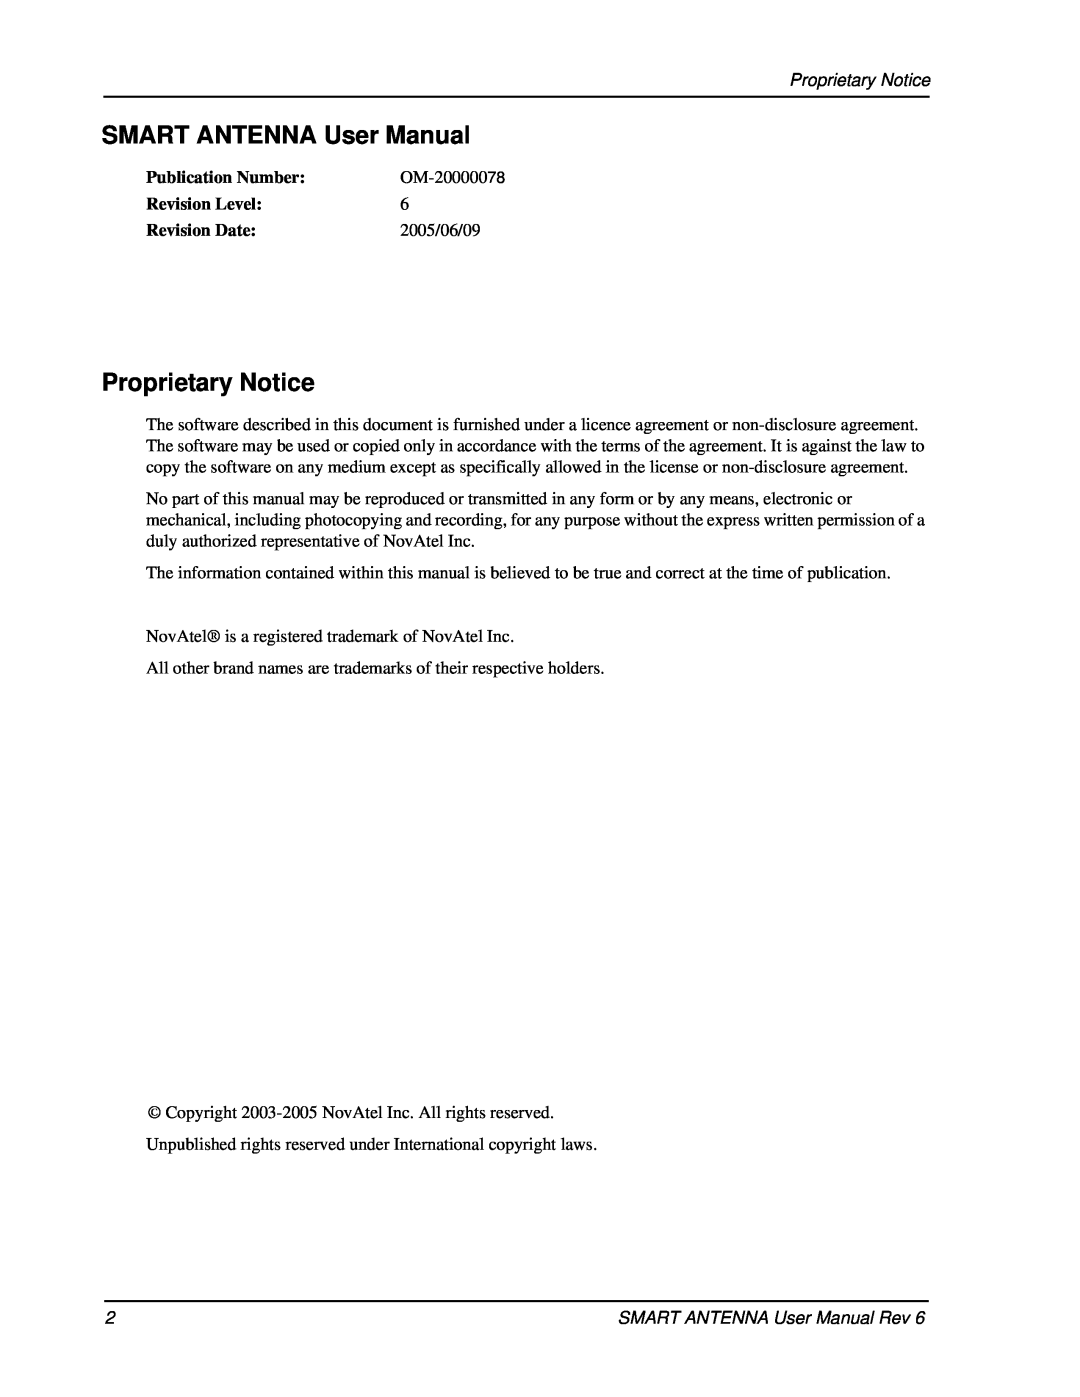 Novatel SMART ANTENNA Proprietary Notice, Publication Number, OM-20000078, Revision Level, Revision Date, 2005/06/09 